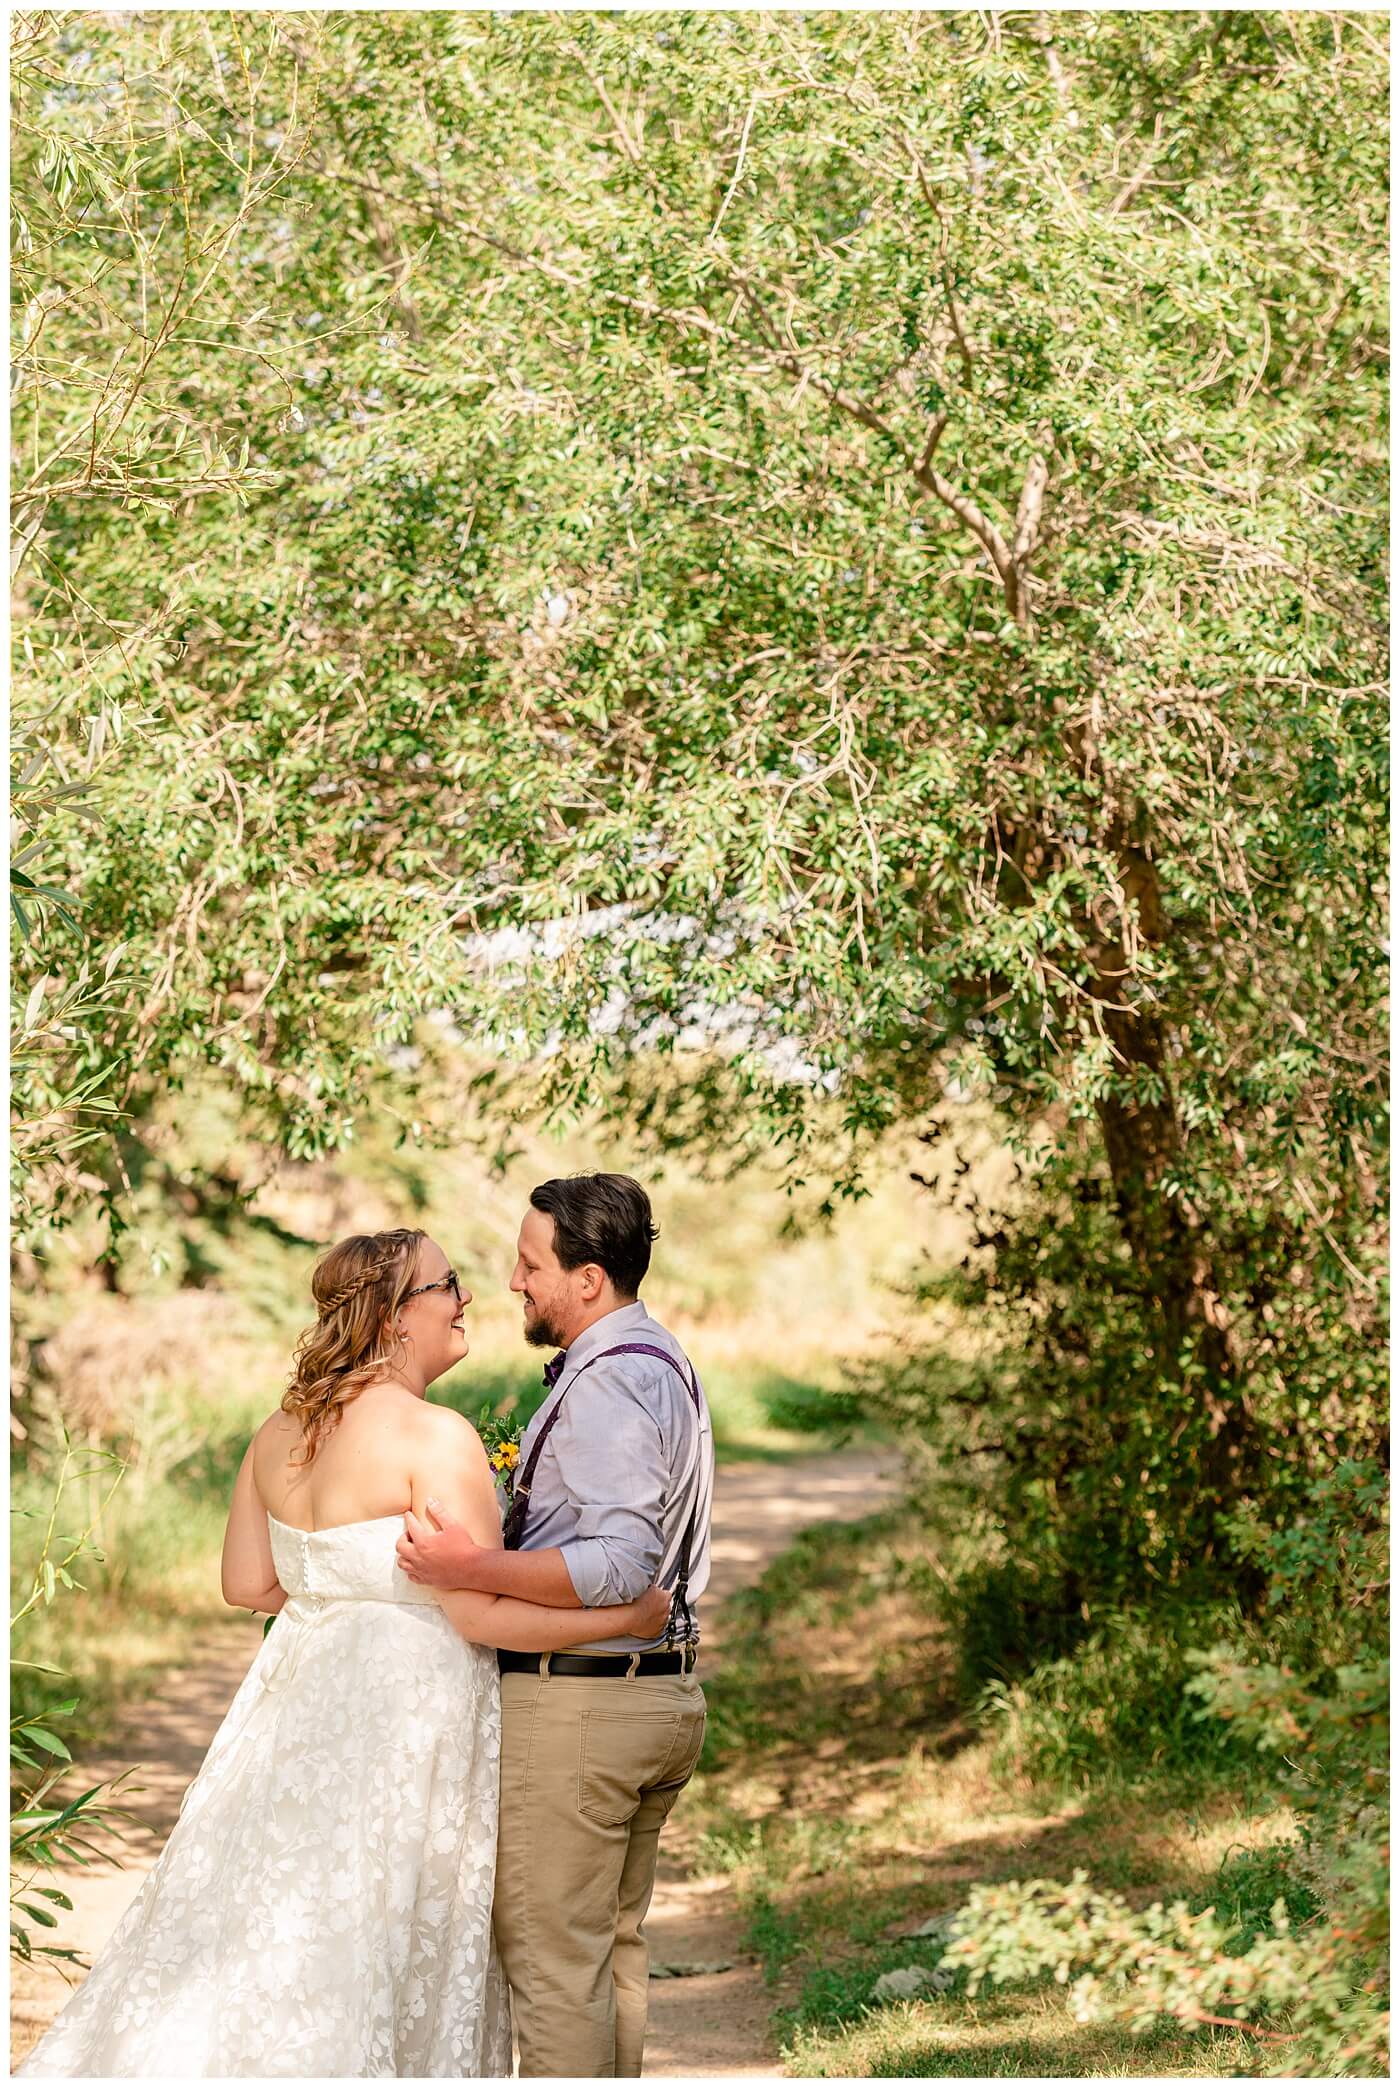 Regina Wedding Photography - Ryan - Aeliesha - Bride & Groom stand under an archway of trees on the island in AE Wilson Park.jpg